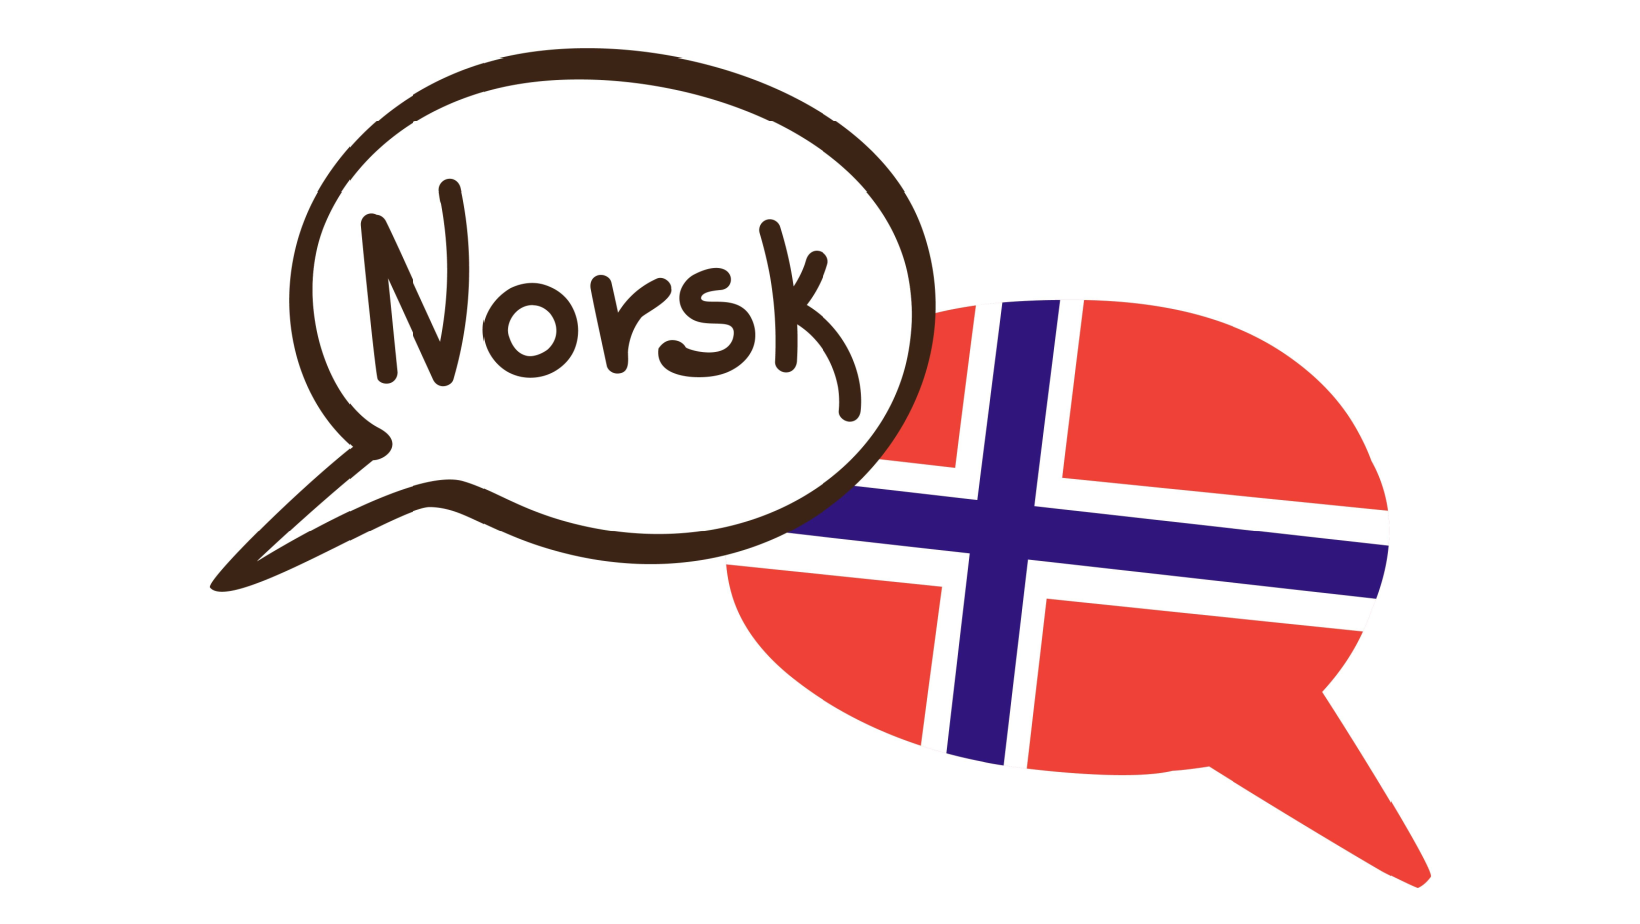 Norwegian language icons.